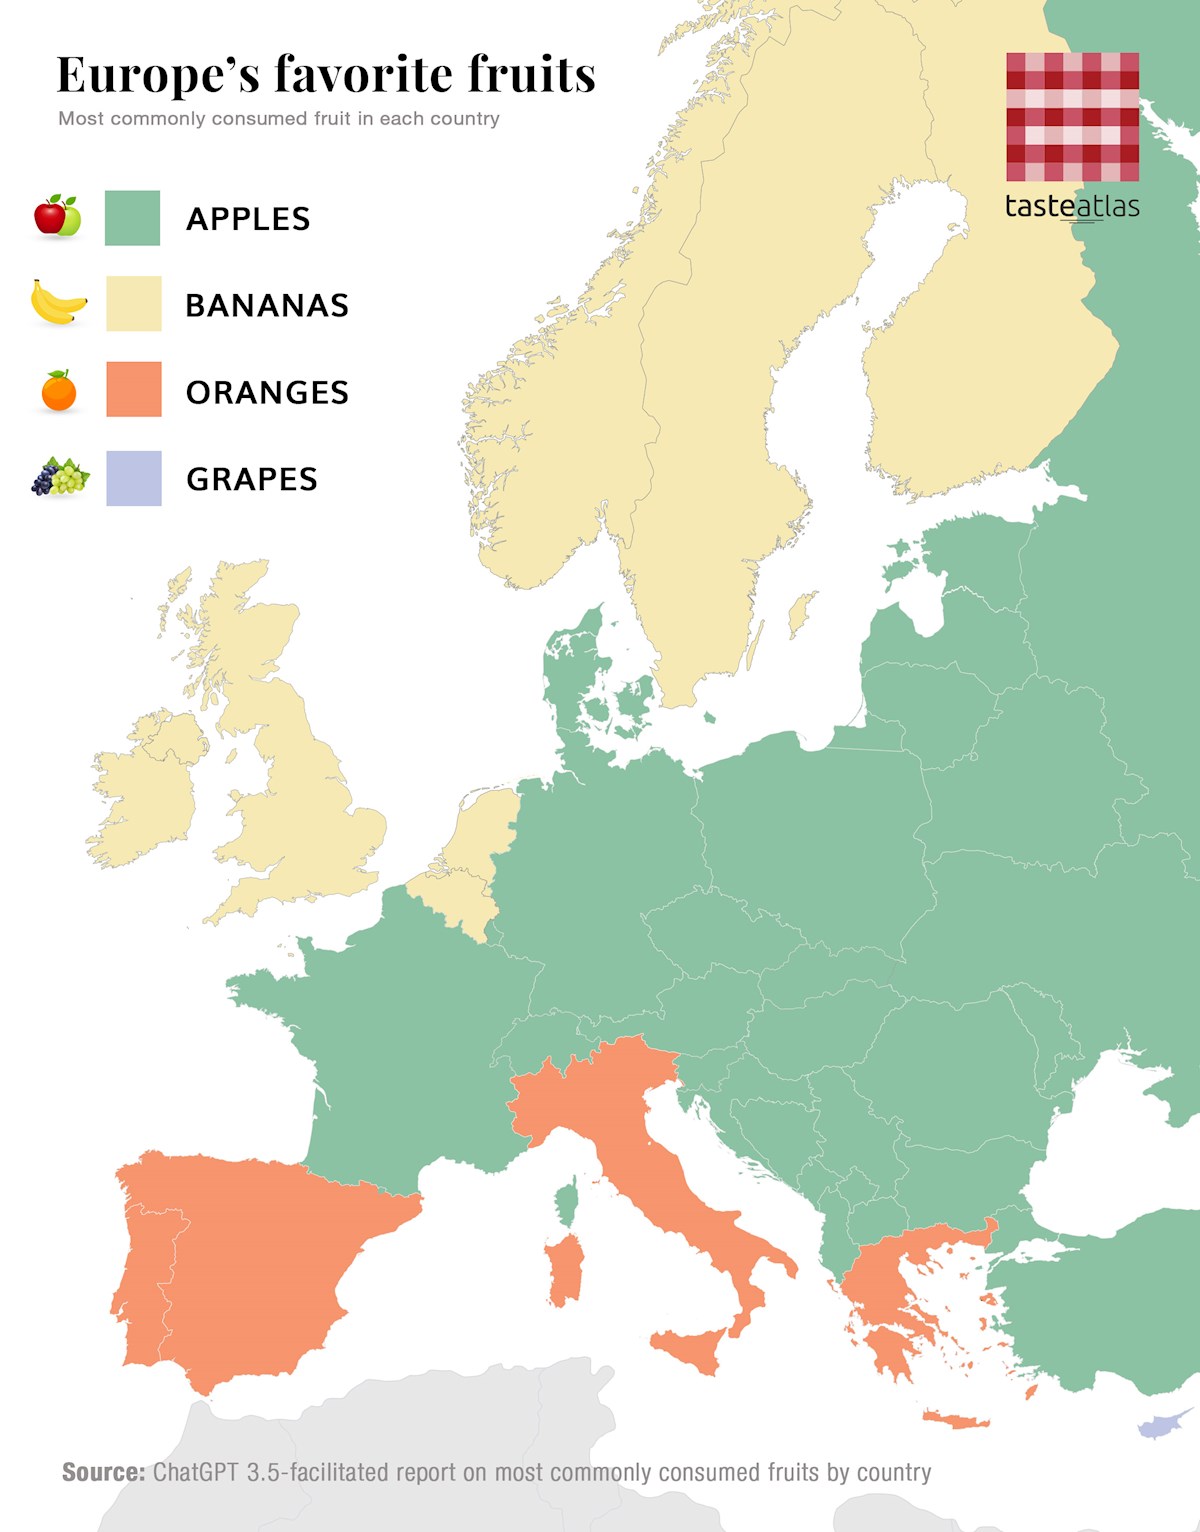 Preferred fruit in each European country